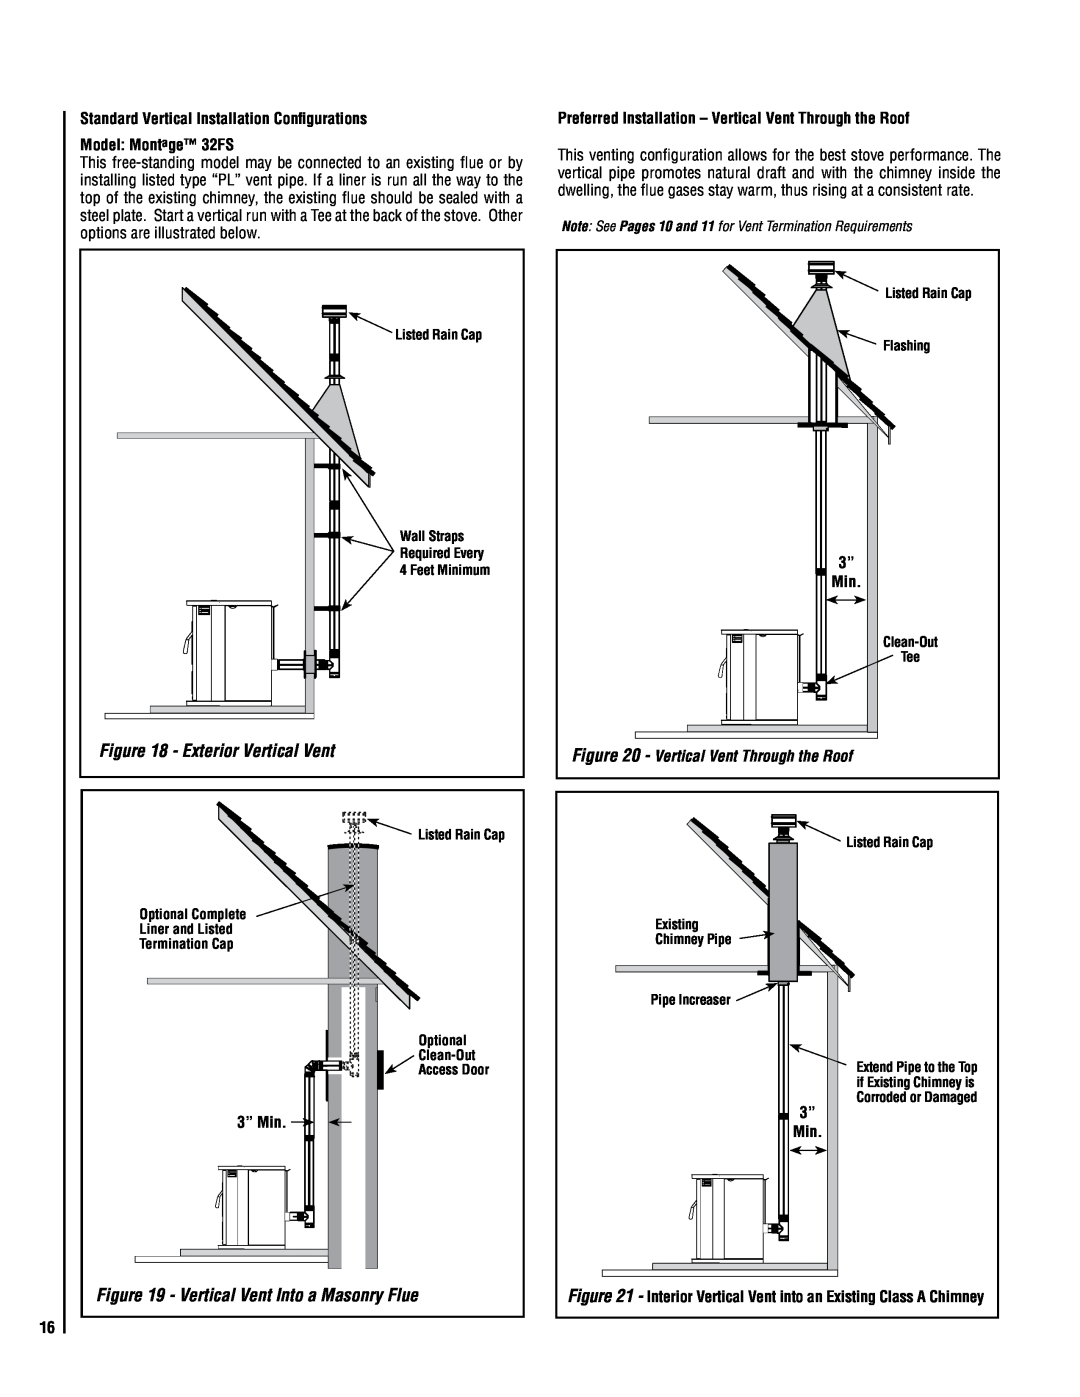 Lennox Hearth operation manual Exterior Vertical Vent, Vertical Vent Into a Masonry Flue, Model Montage 32FS, 3” Min 